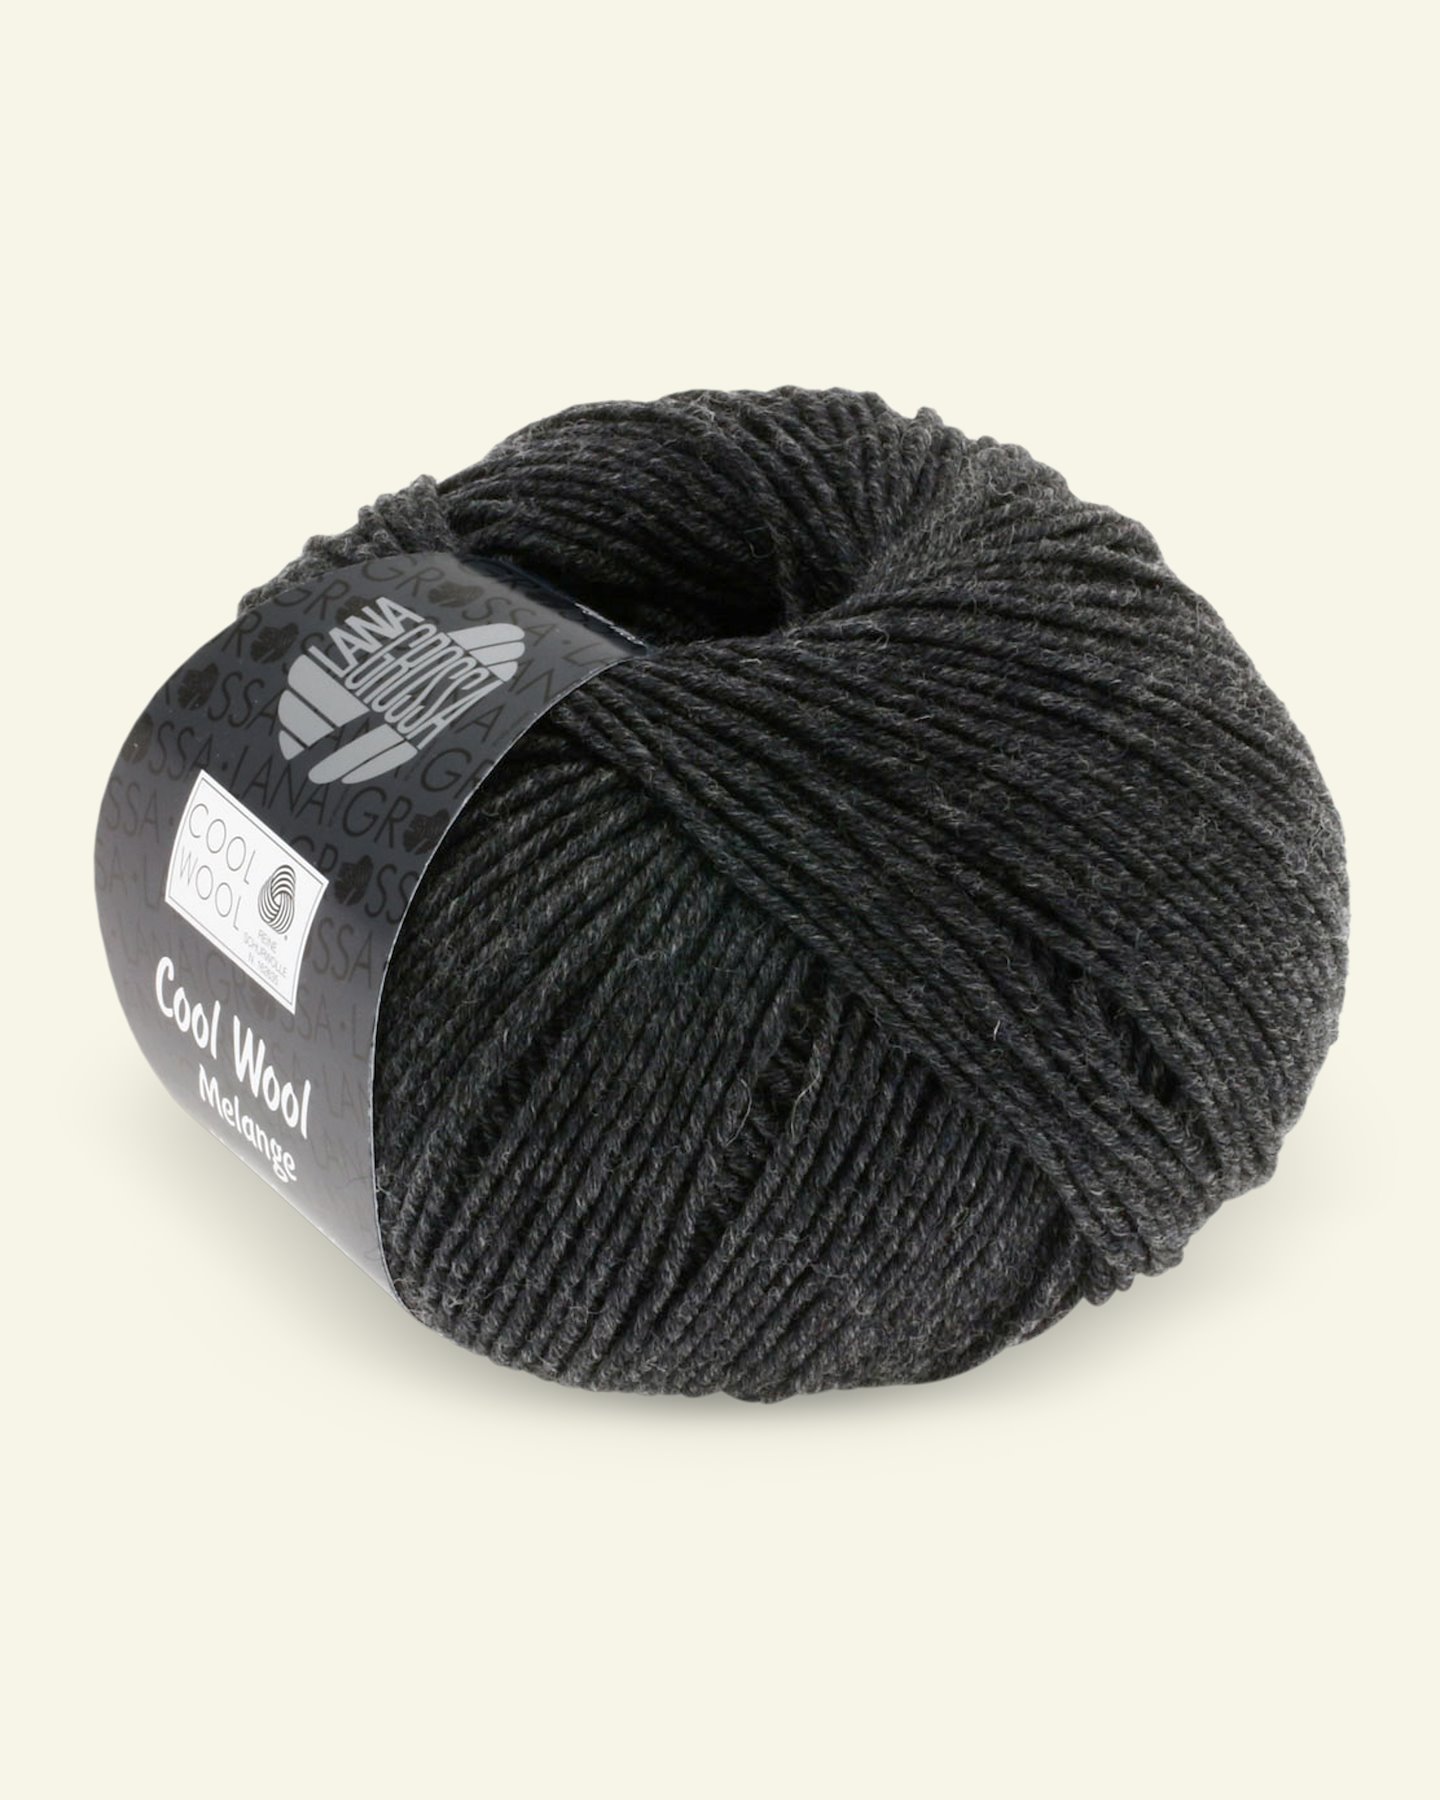 Lana Grossa, extrafine merino wool yarn "Cool Wool", dark grey mel. 90001113_pack